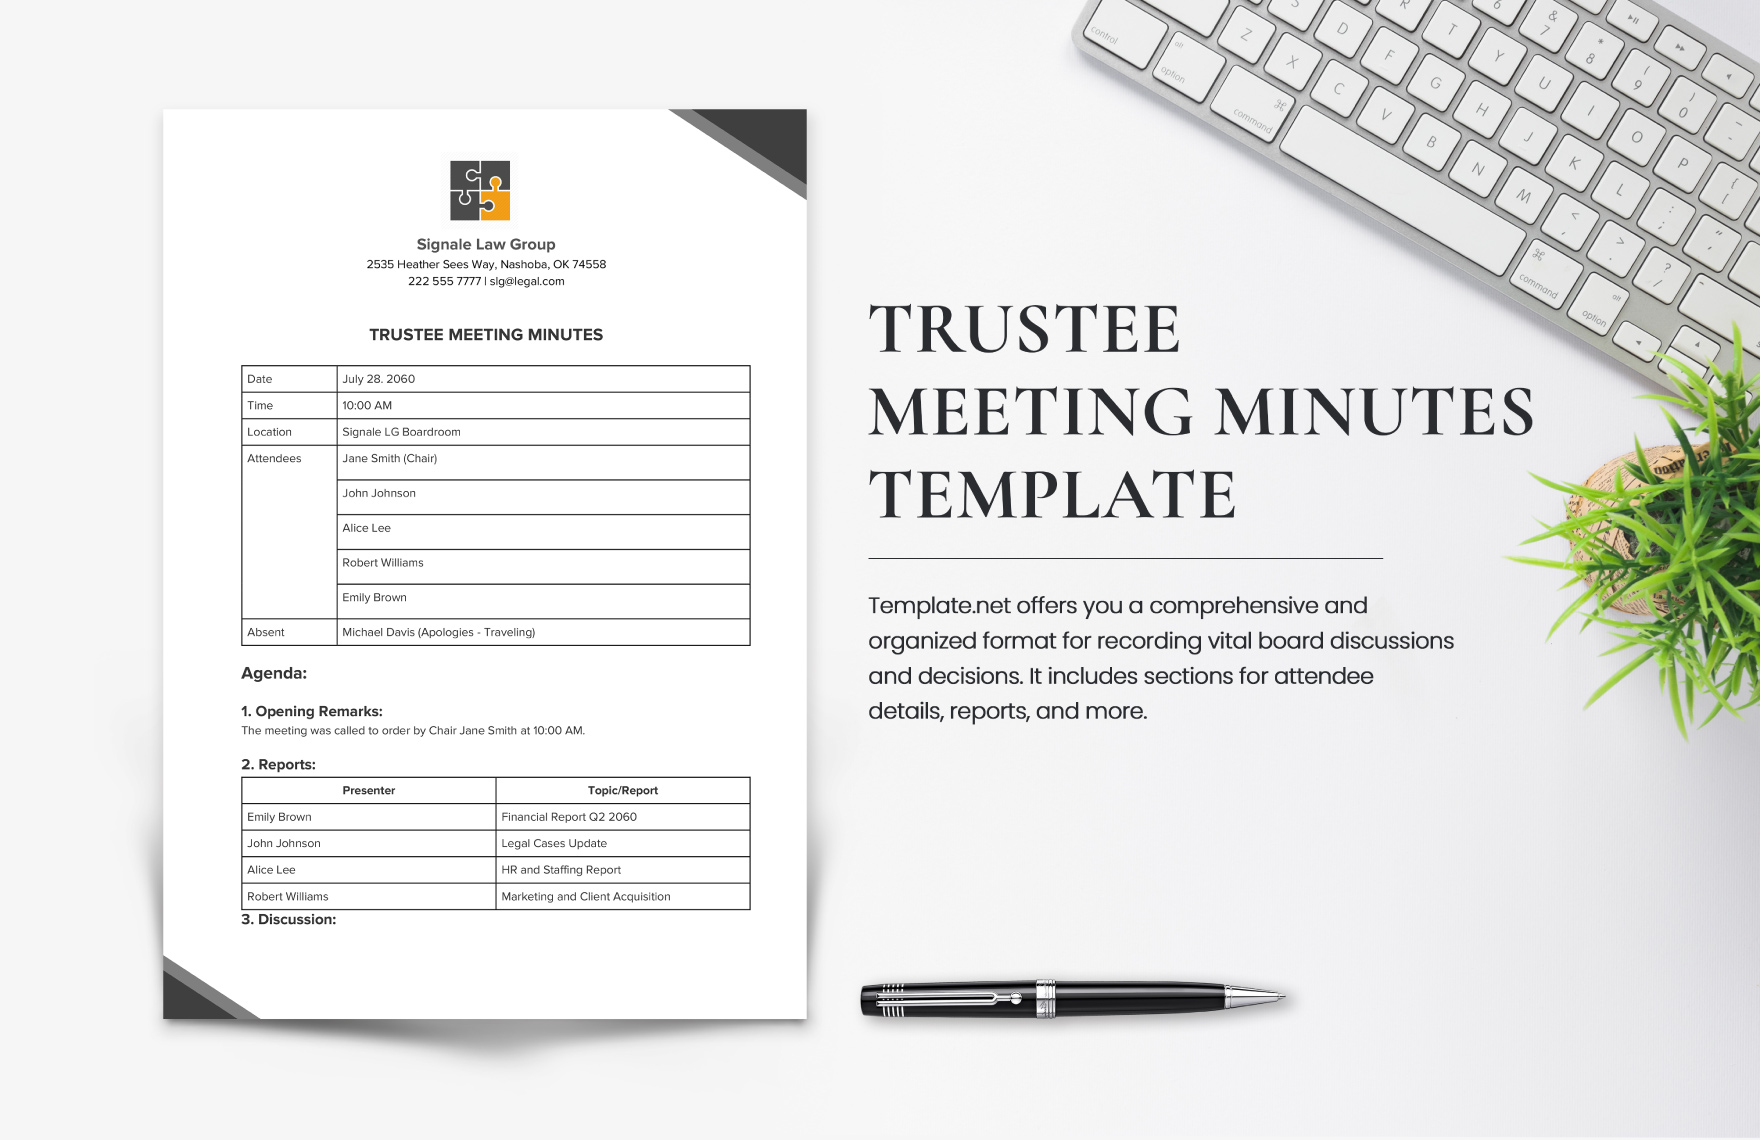 Trustee Meeting Minutes Template